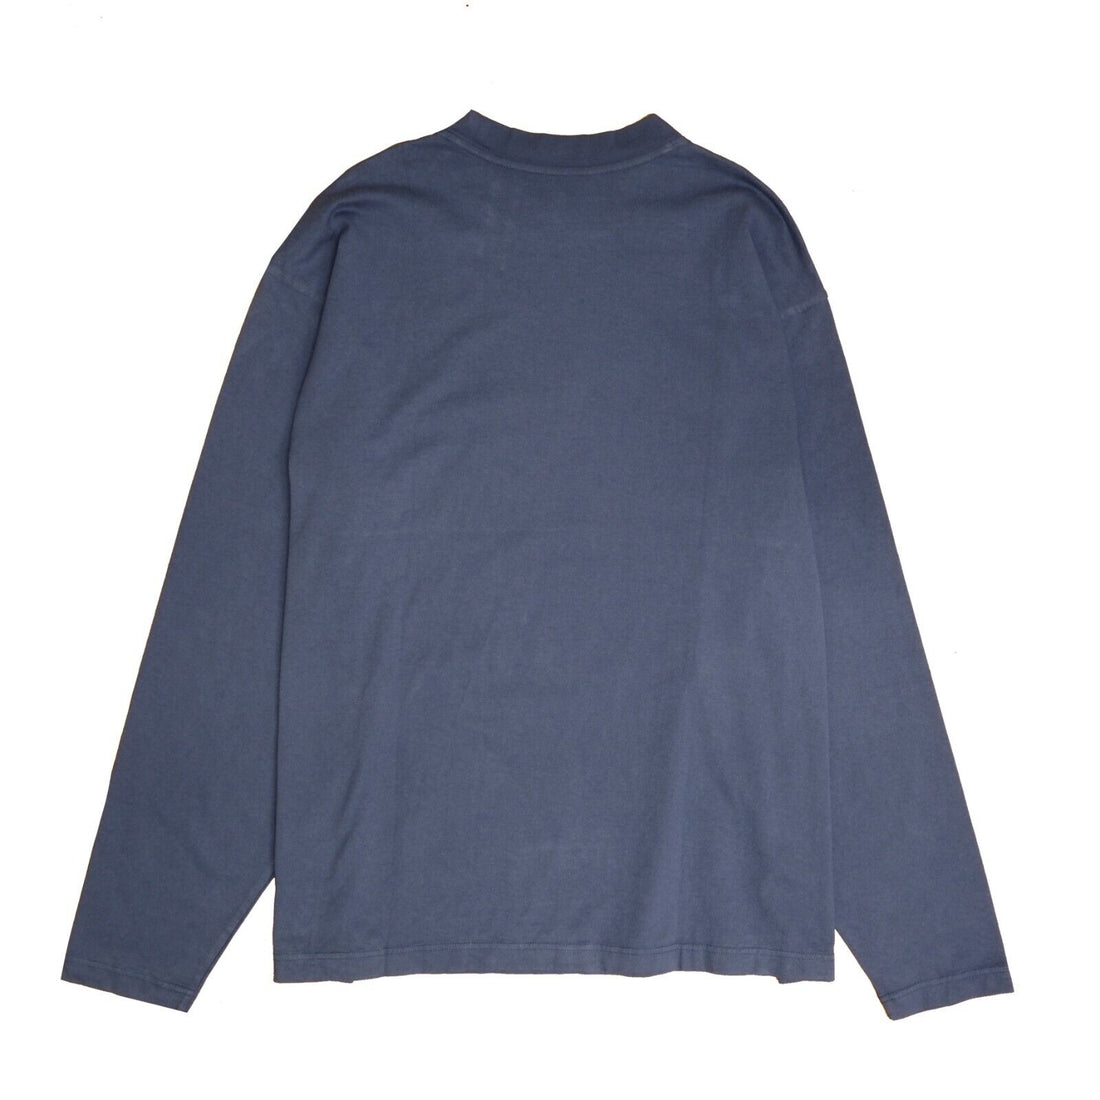 Yeezy Gap Unreleased Long Sleeve T-Shirt Size XL Navy Blue